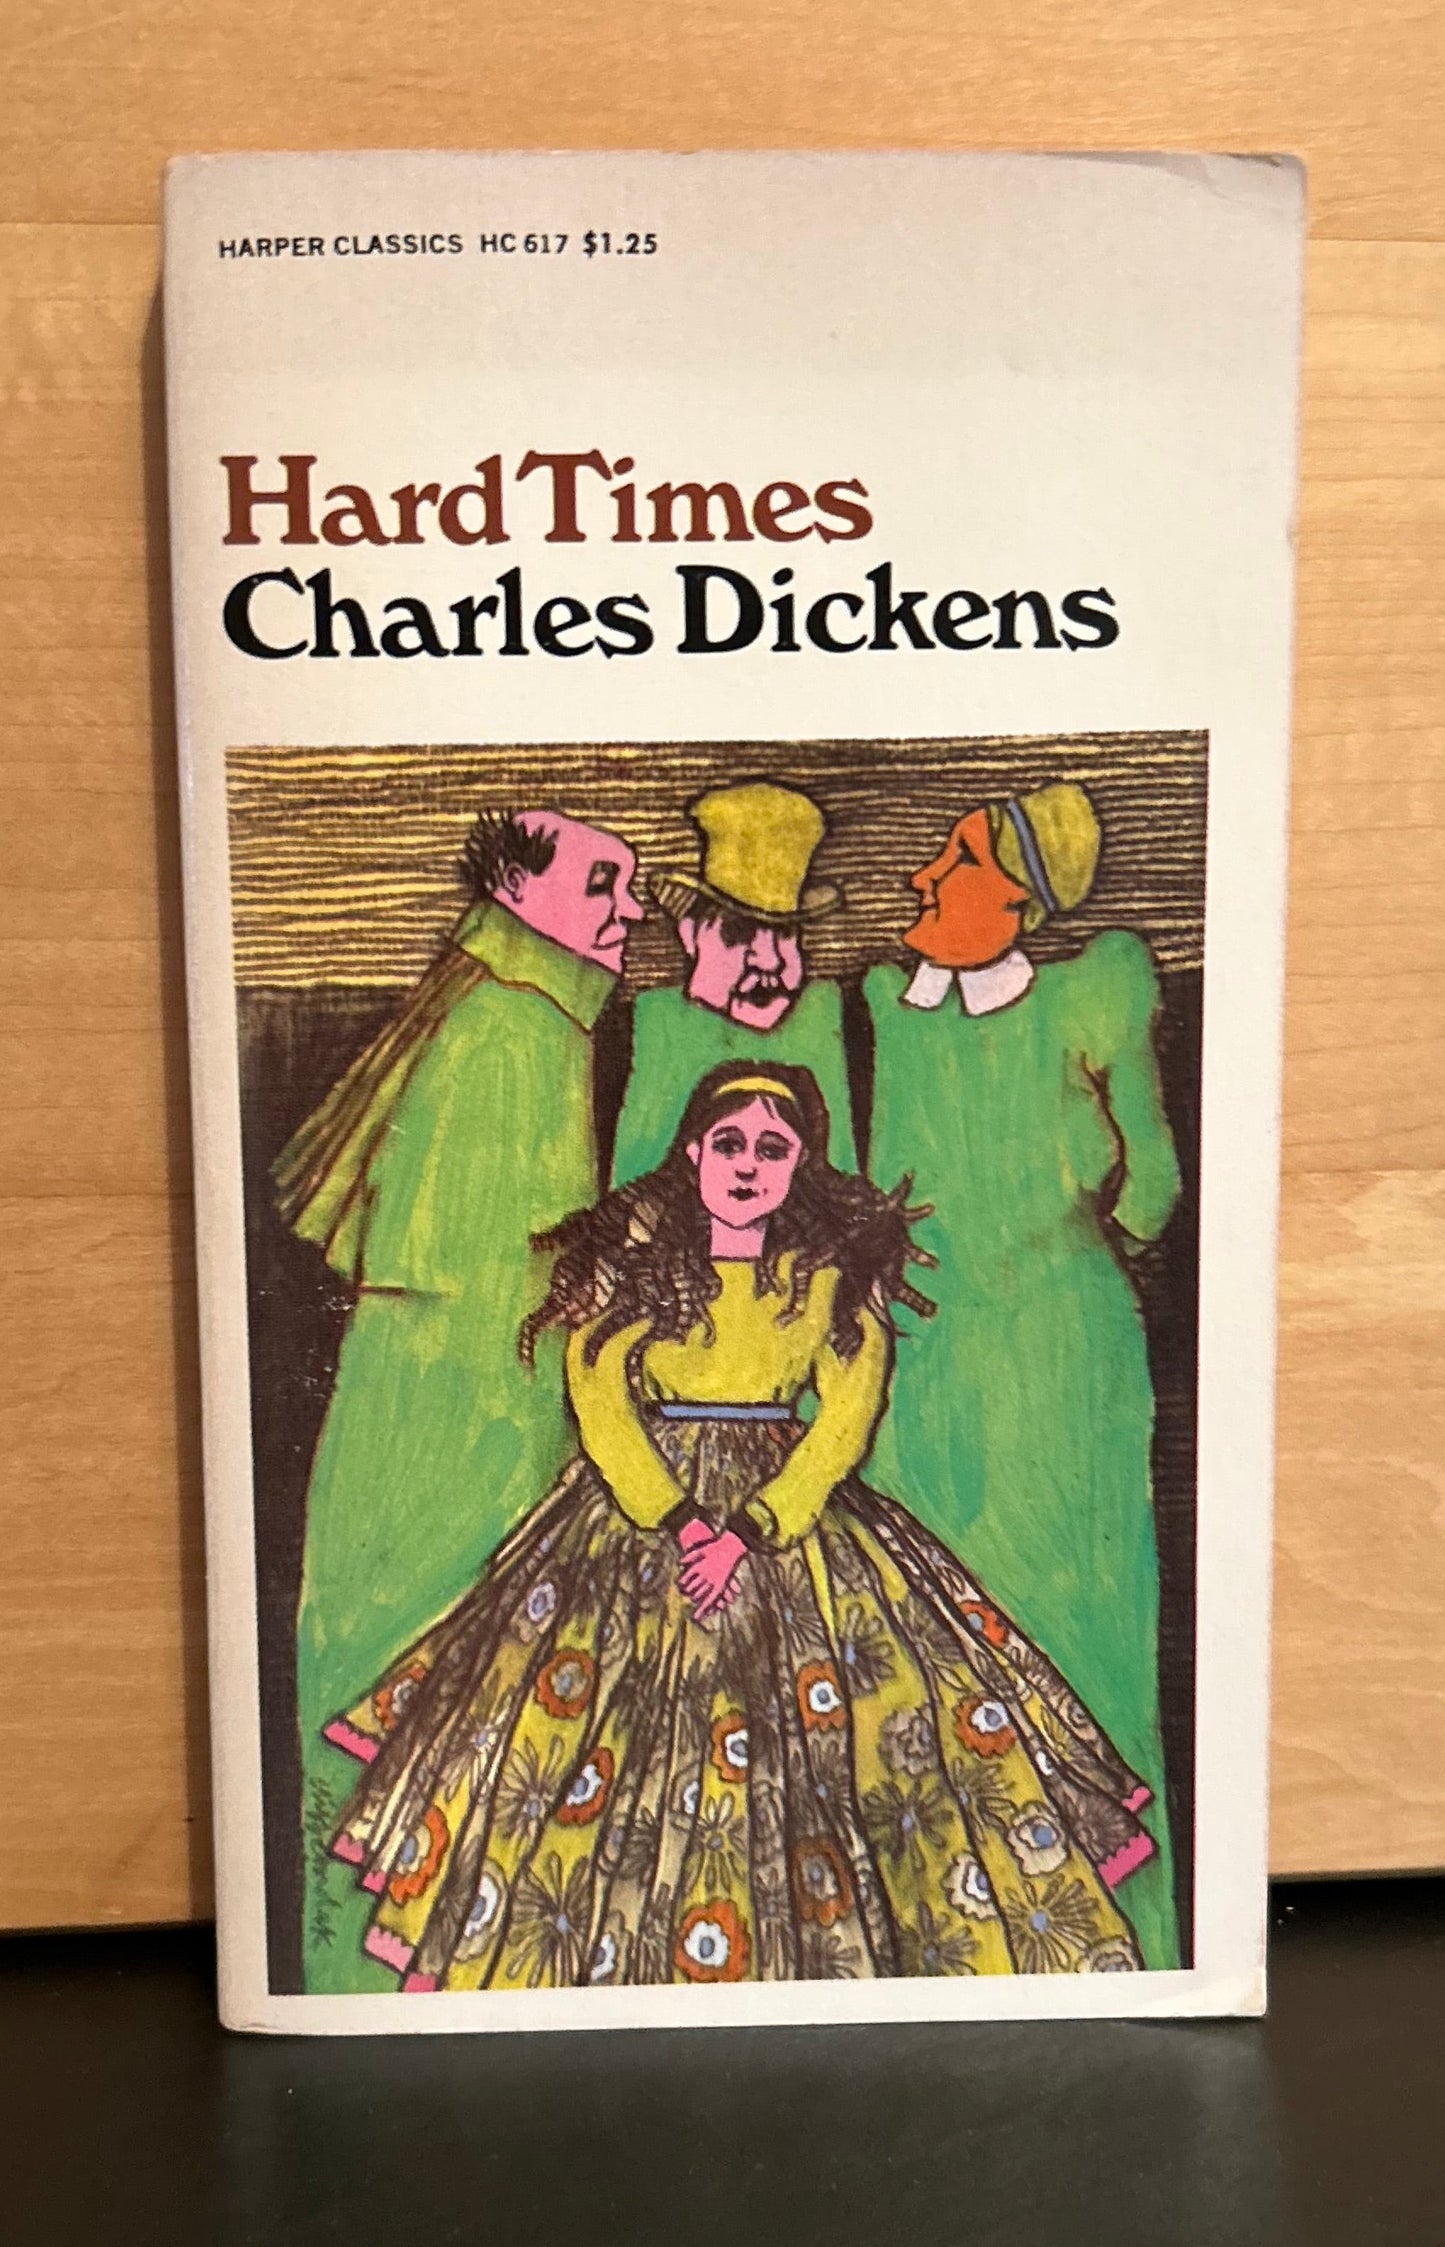 Hard Times - Charles Dickens - Harper